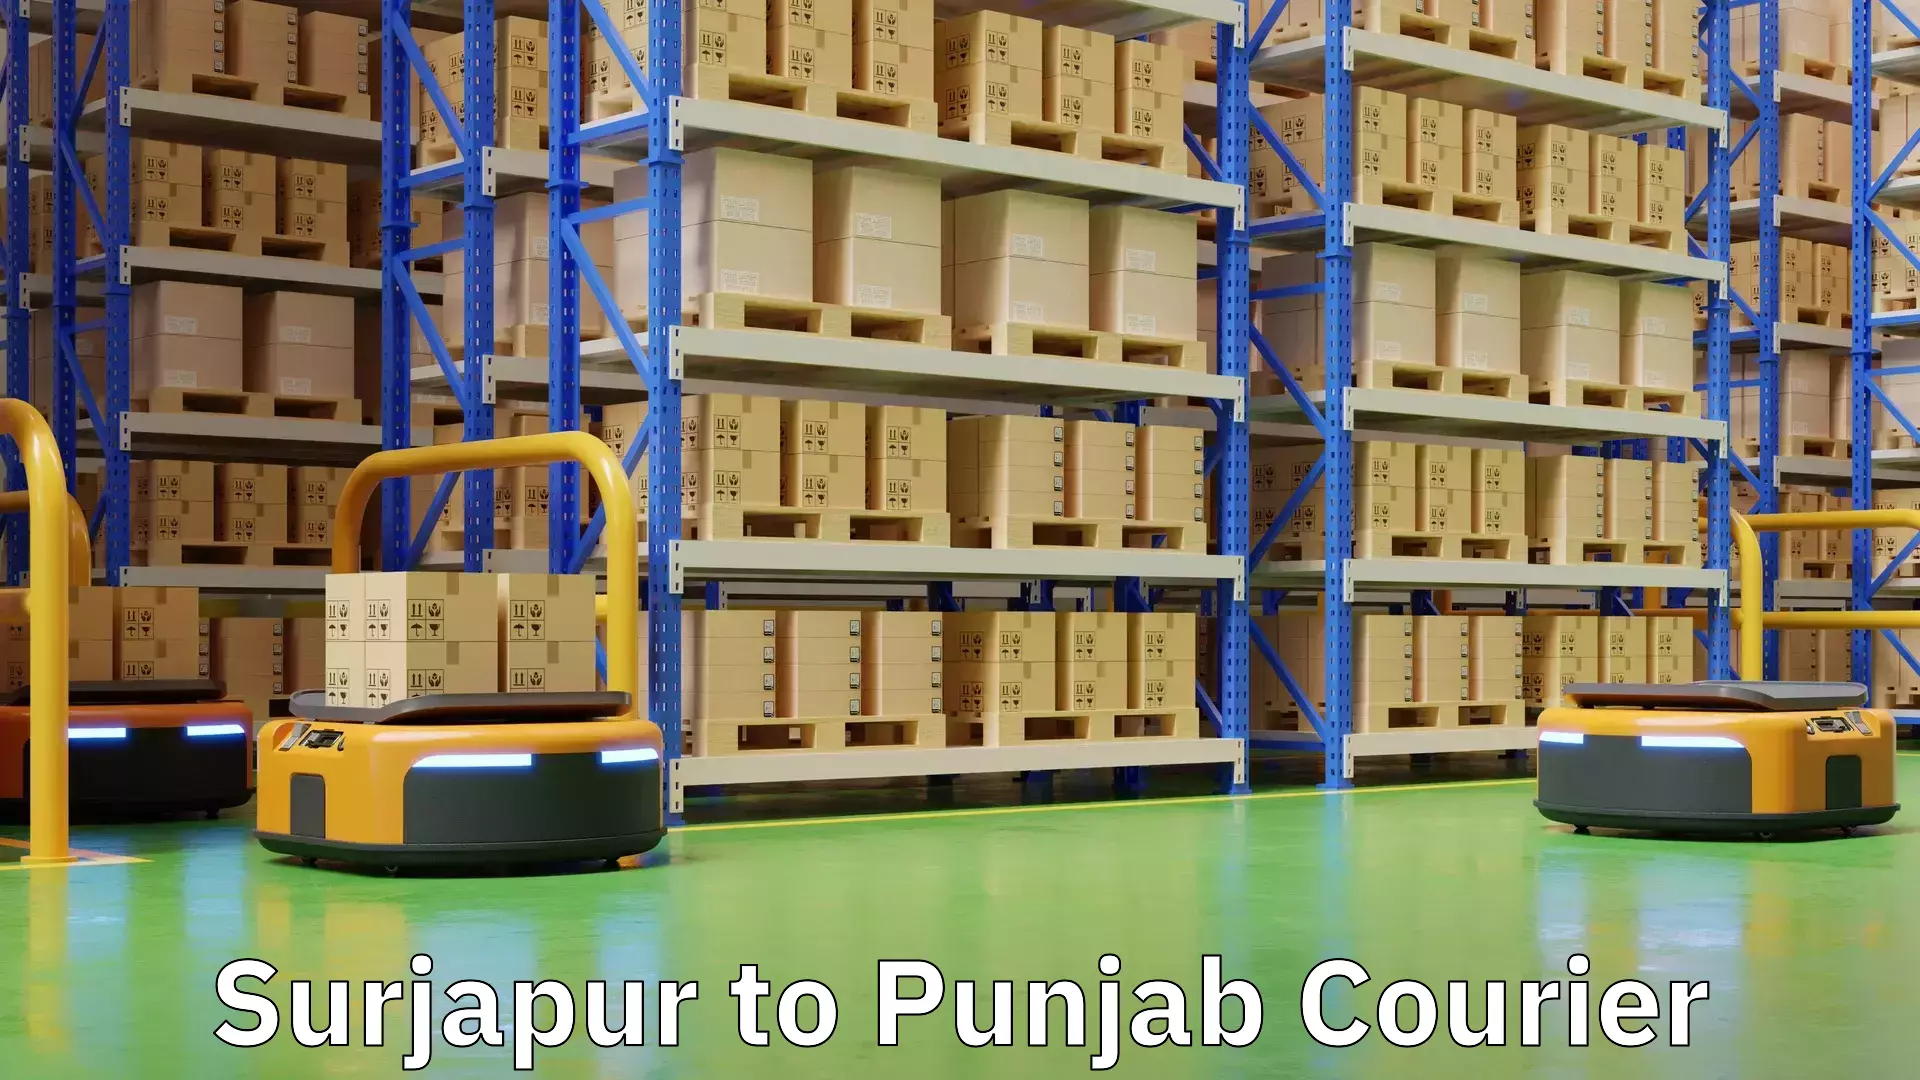 Cash on delivery service Surjapur to Punjab